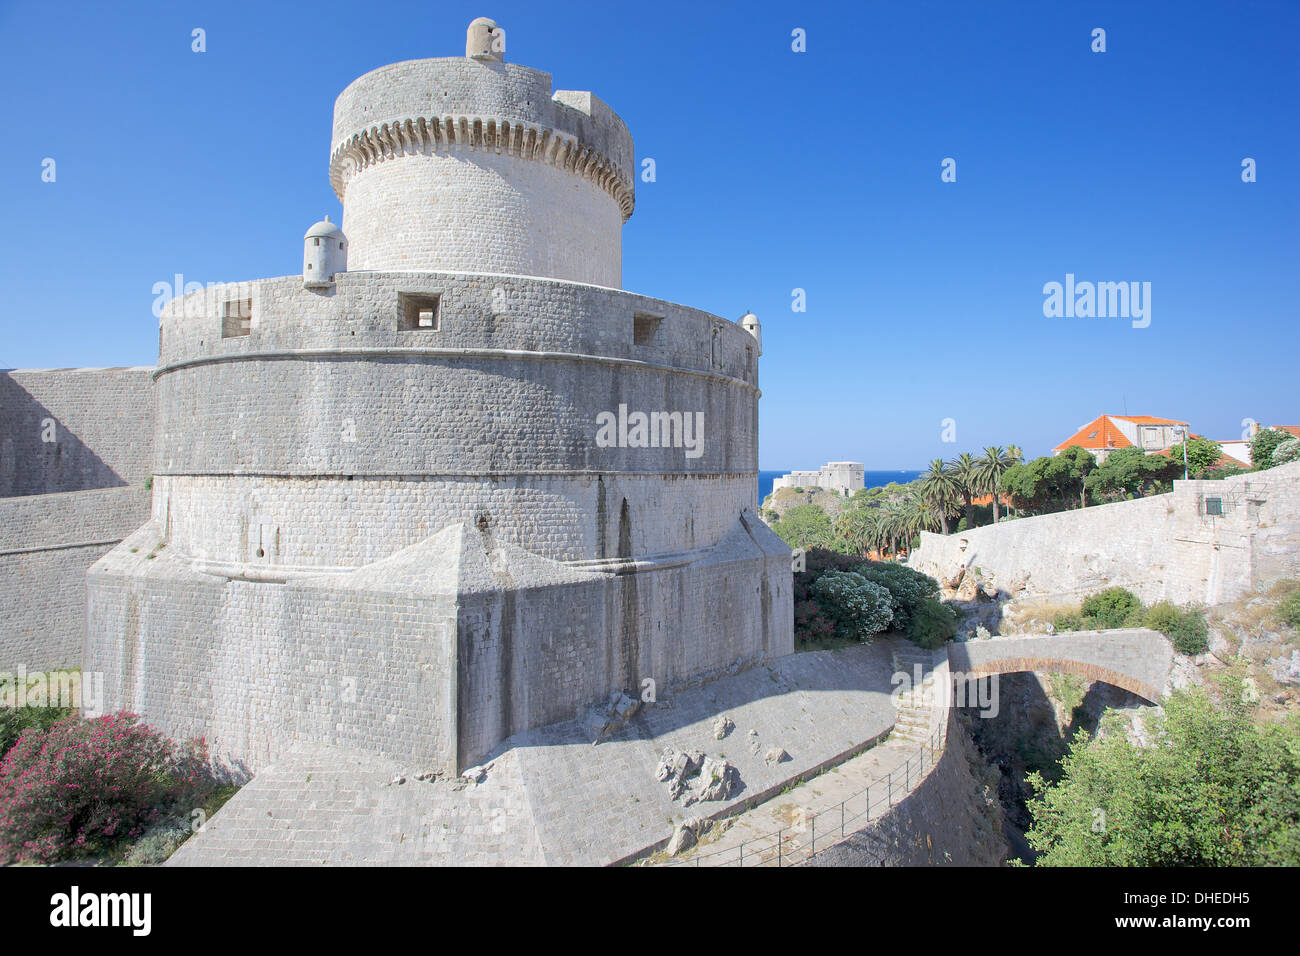 Minceta Fort and Old Town Walls, UNESCO World Heritage Site, Dubrovnik, Dalmatia, Croatia, Europe Stock Photo